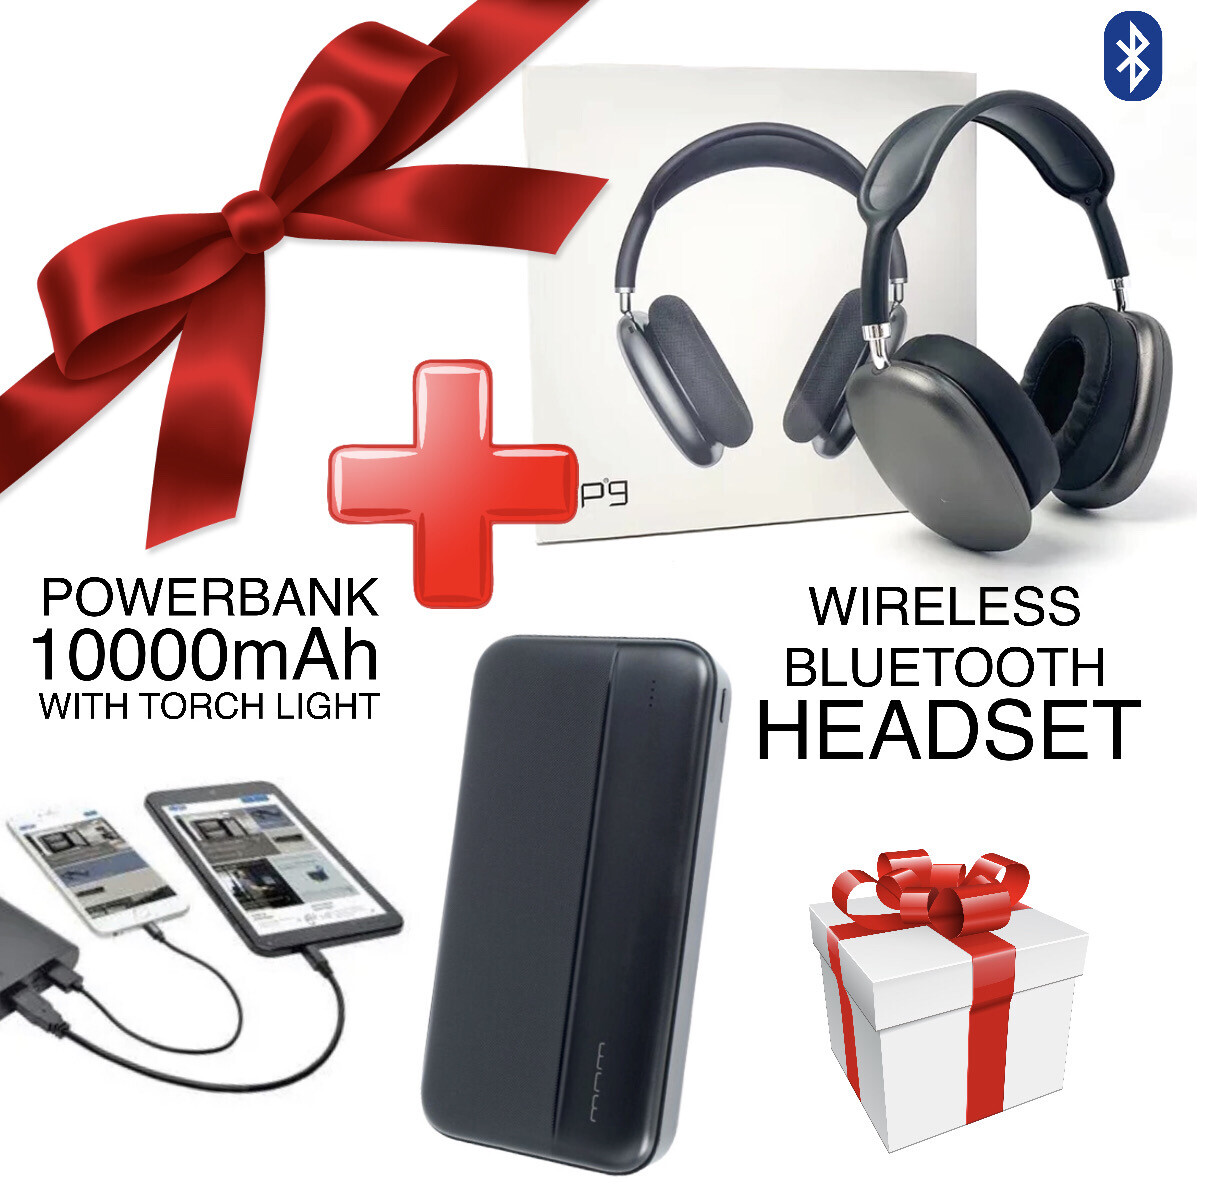 Powerbank + Headset